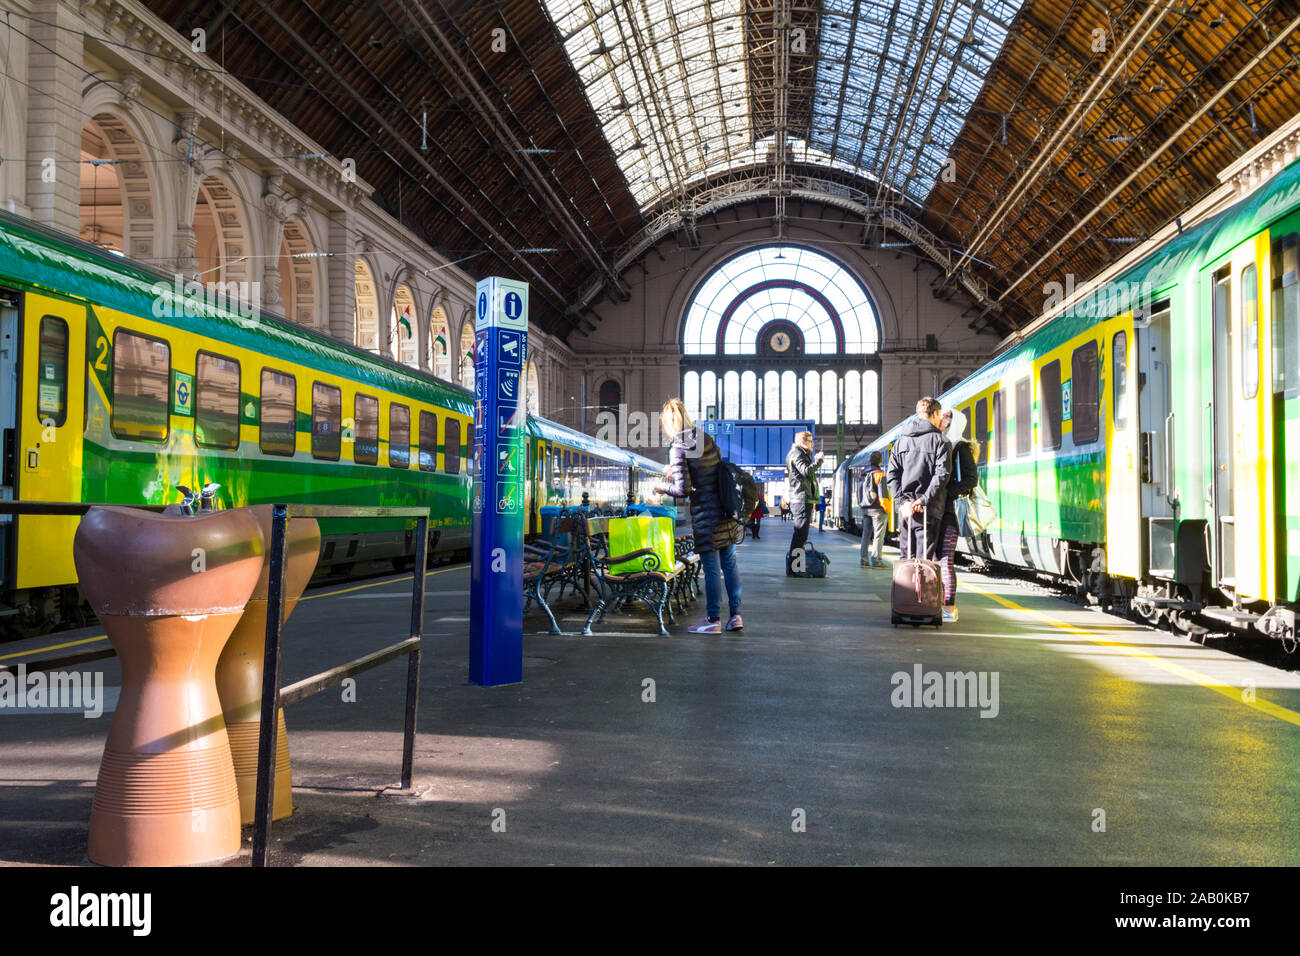 GYSEV treni e passeggeri a Keleti palyaudvar stazione ferroviaria costruita nel 1884, Budapest, Ungheria Foto Stock